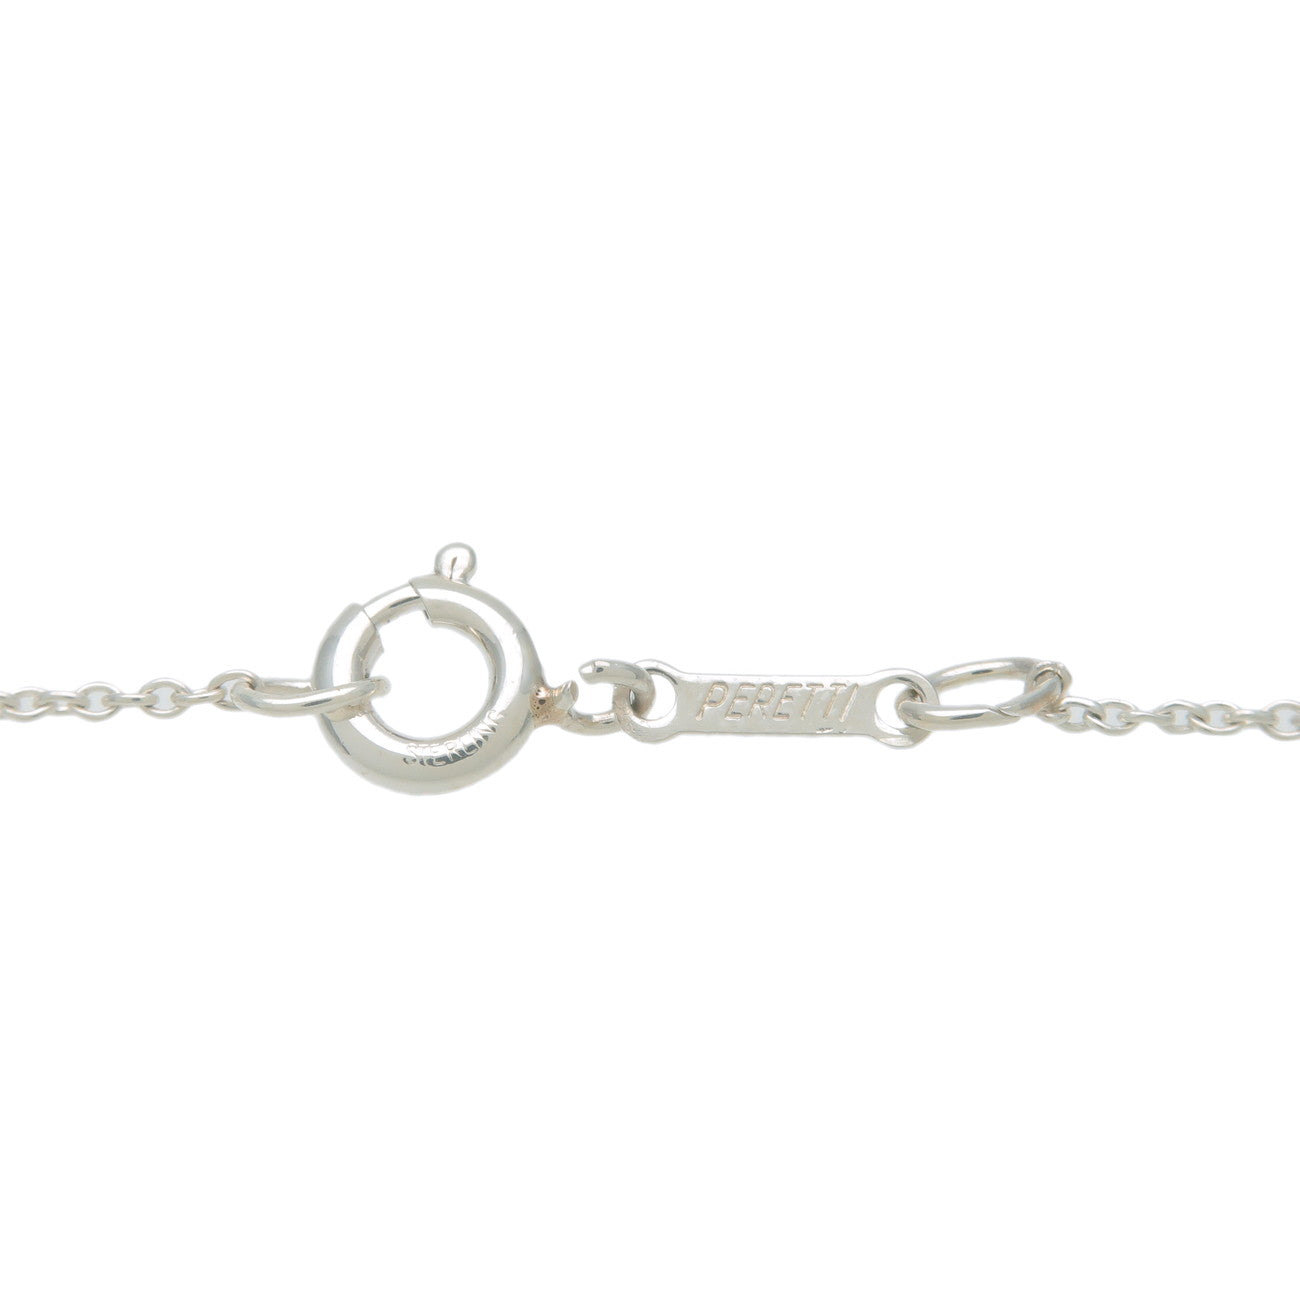 Tiffany&Co. Tiffany Mini Bean Charm Necklace Small SV925 Silver